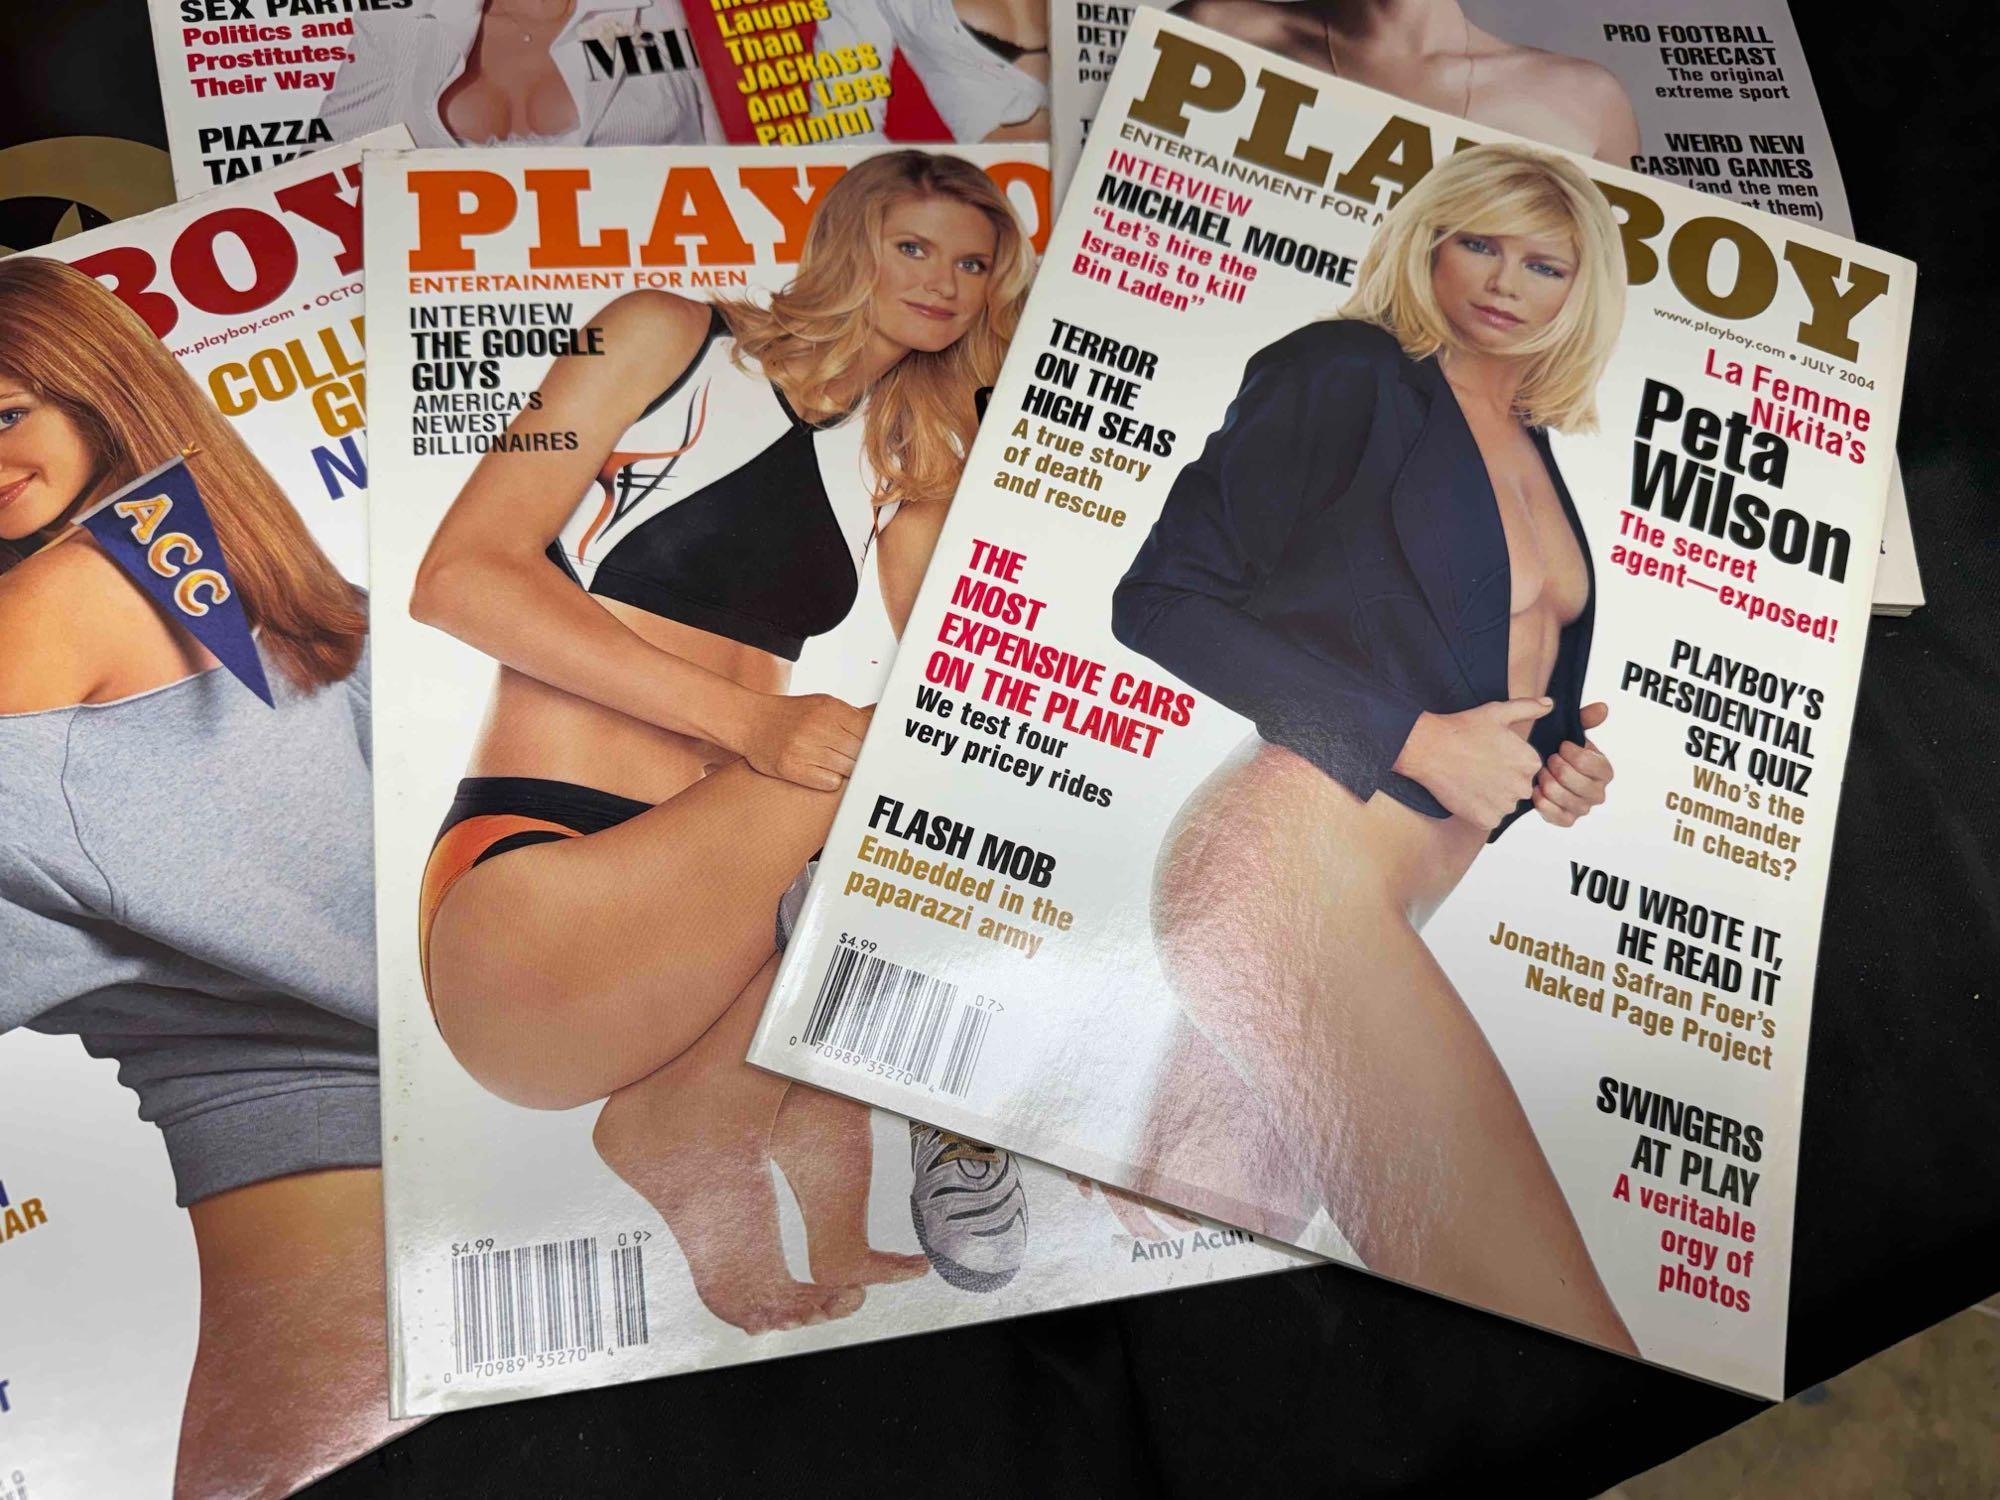 21 Playboy Magazines 1990s-2000s Centerfolds